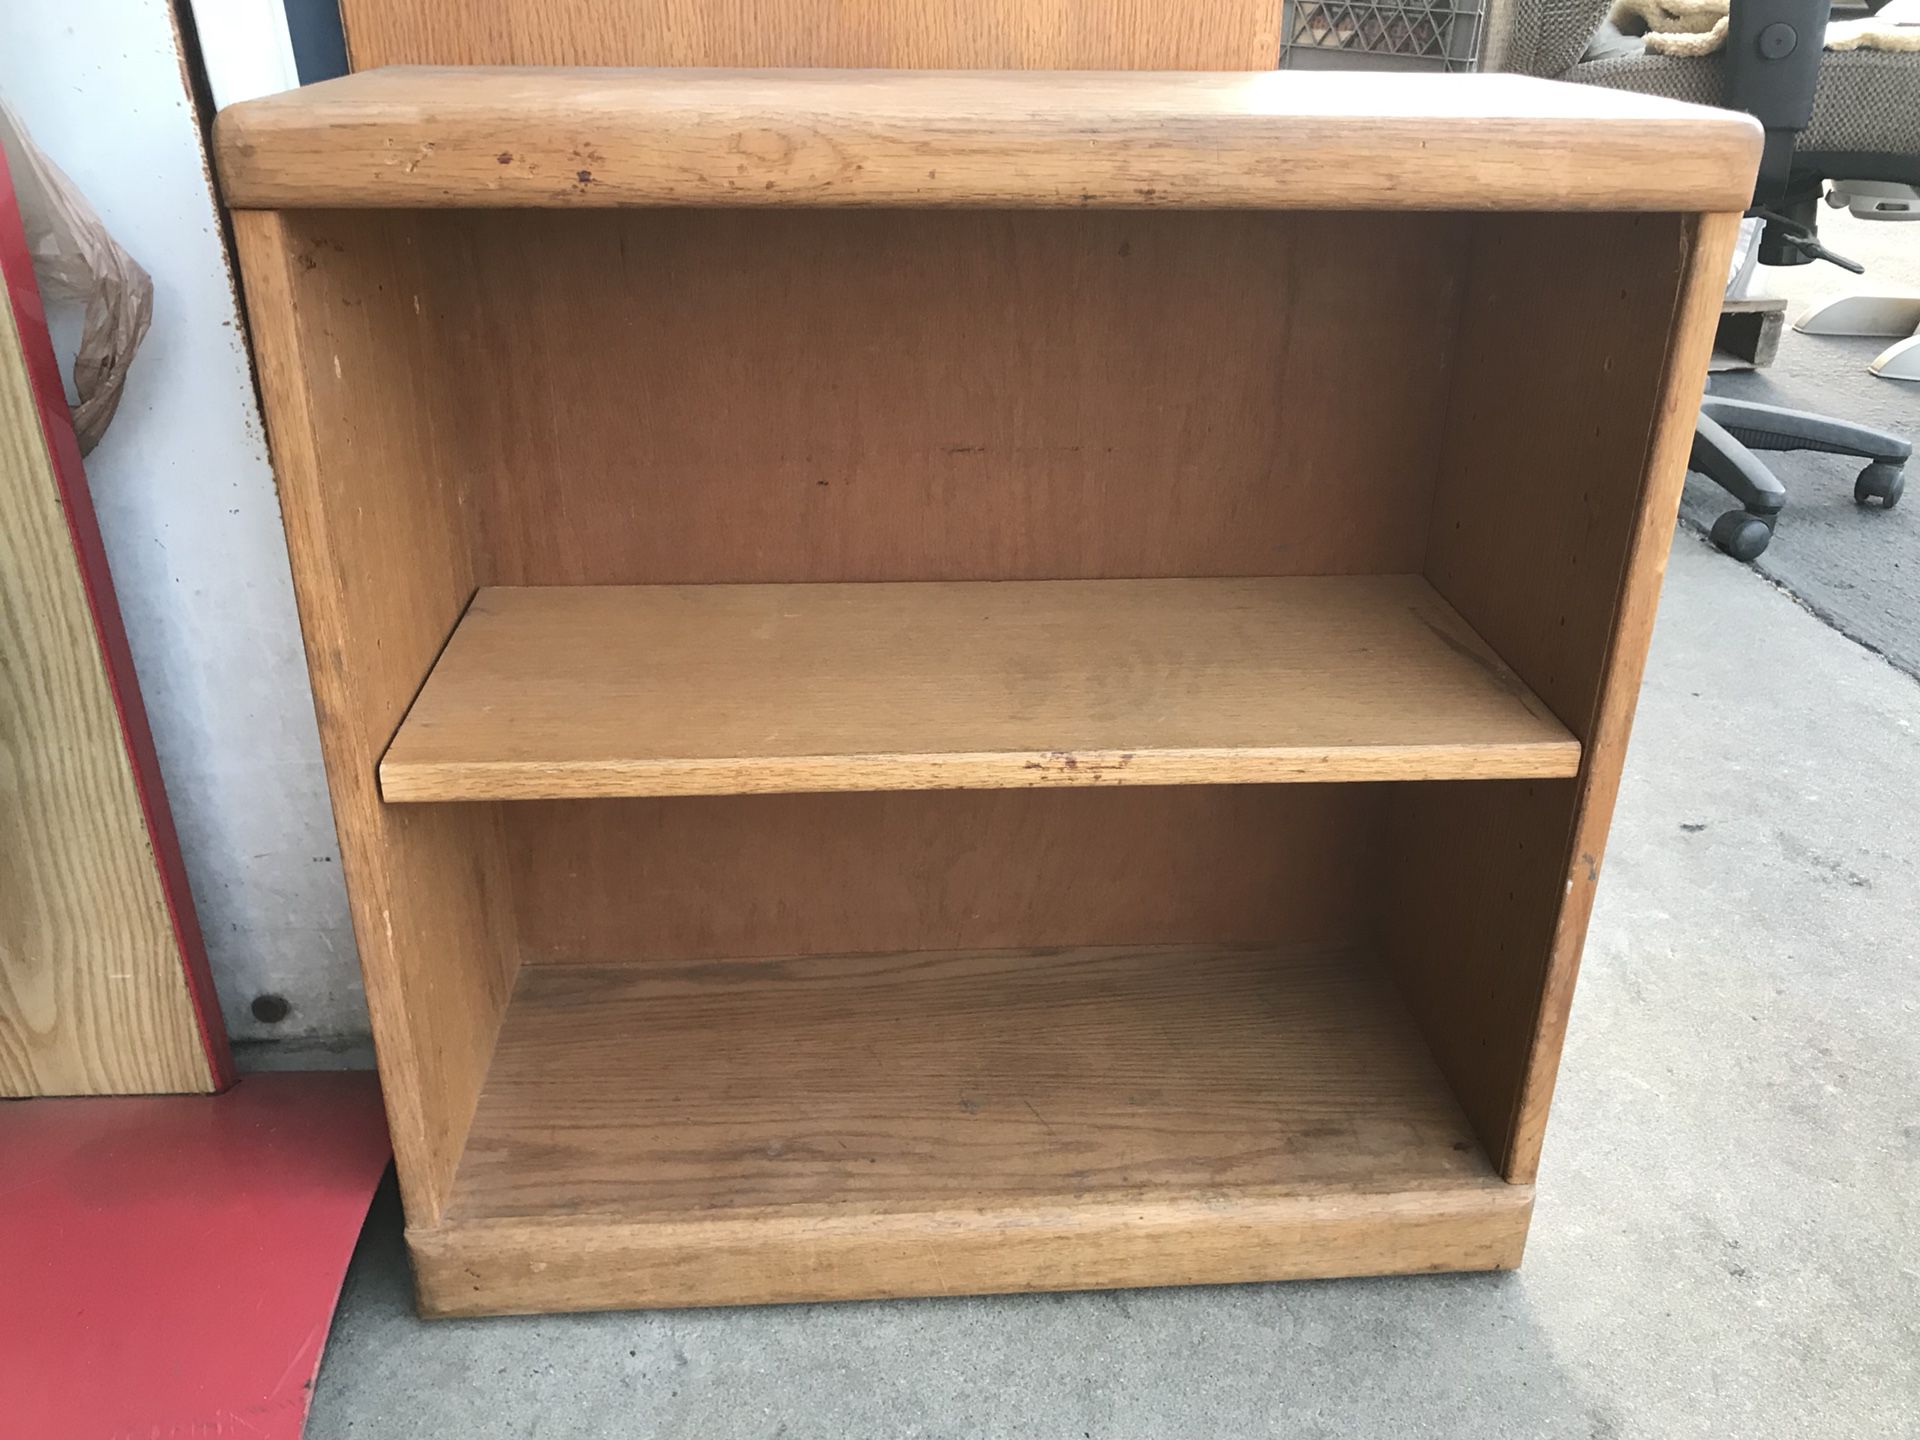 Small oak bookshelf